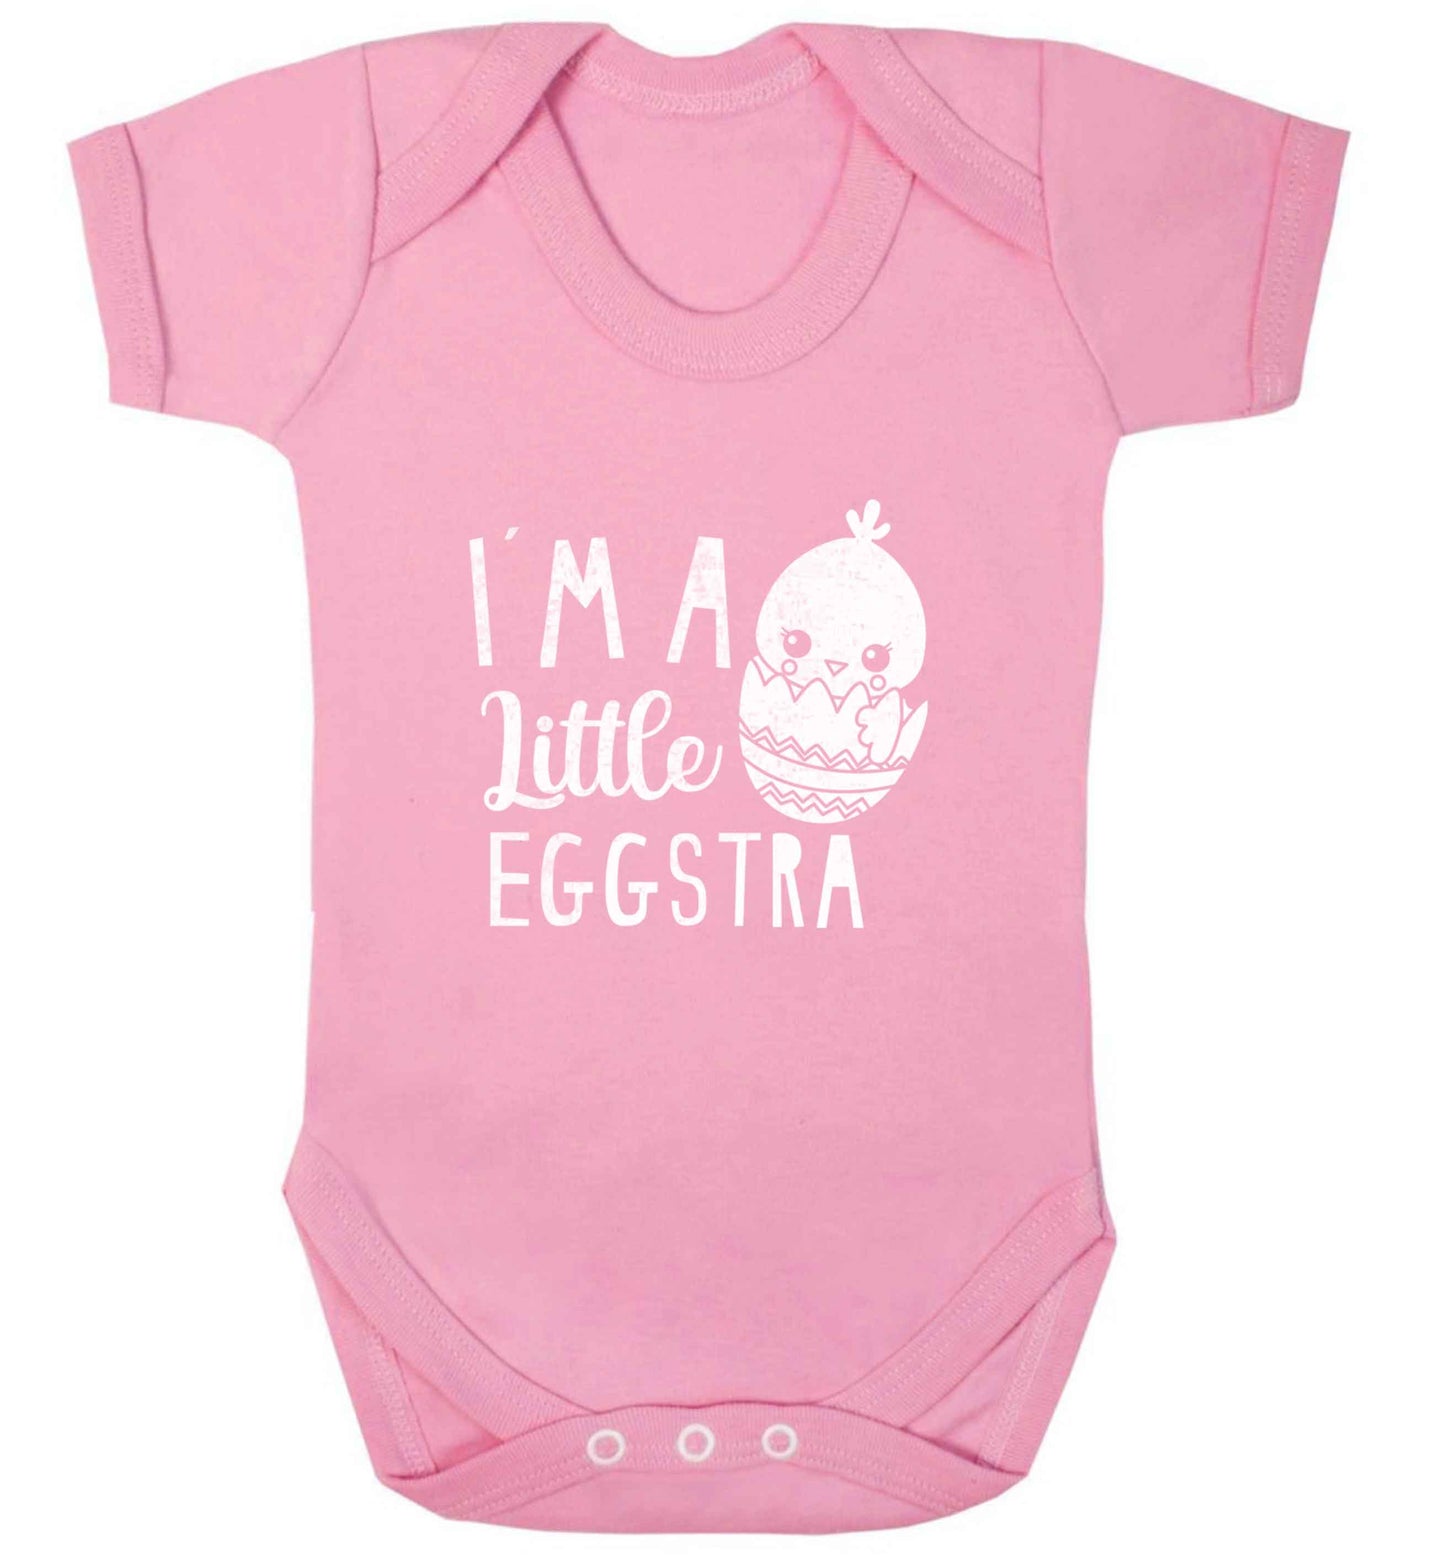 I'm a little eggstra baby vest pale pink 18-24 months